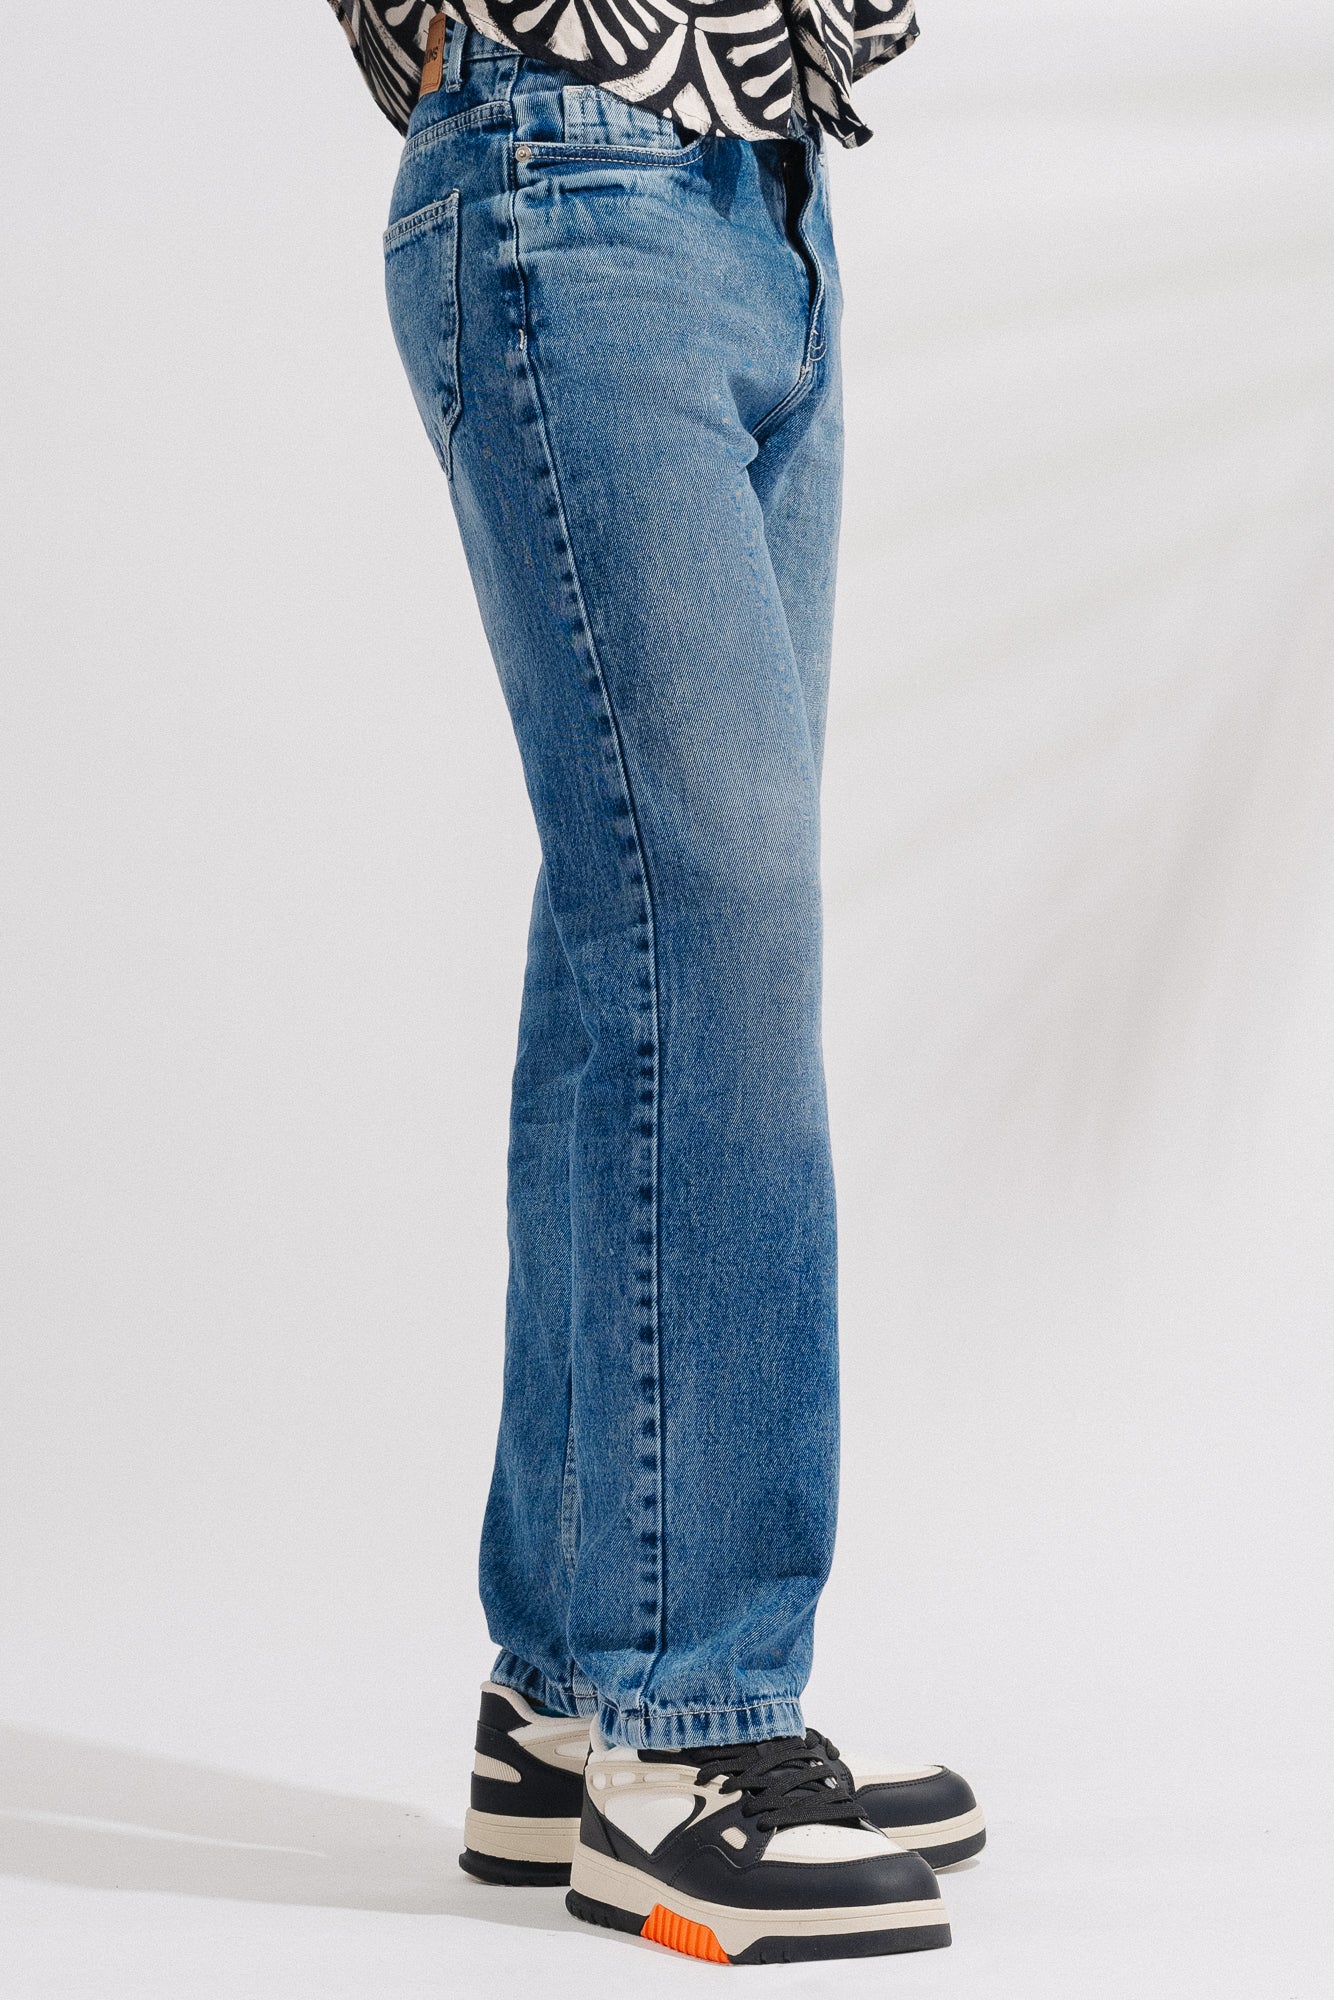 Men's Vintage Straight Jeans in Franklin Mid Blue